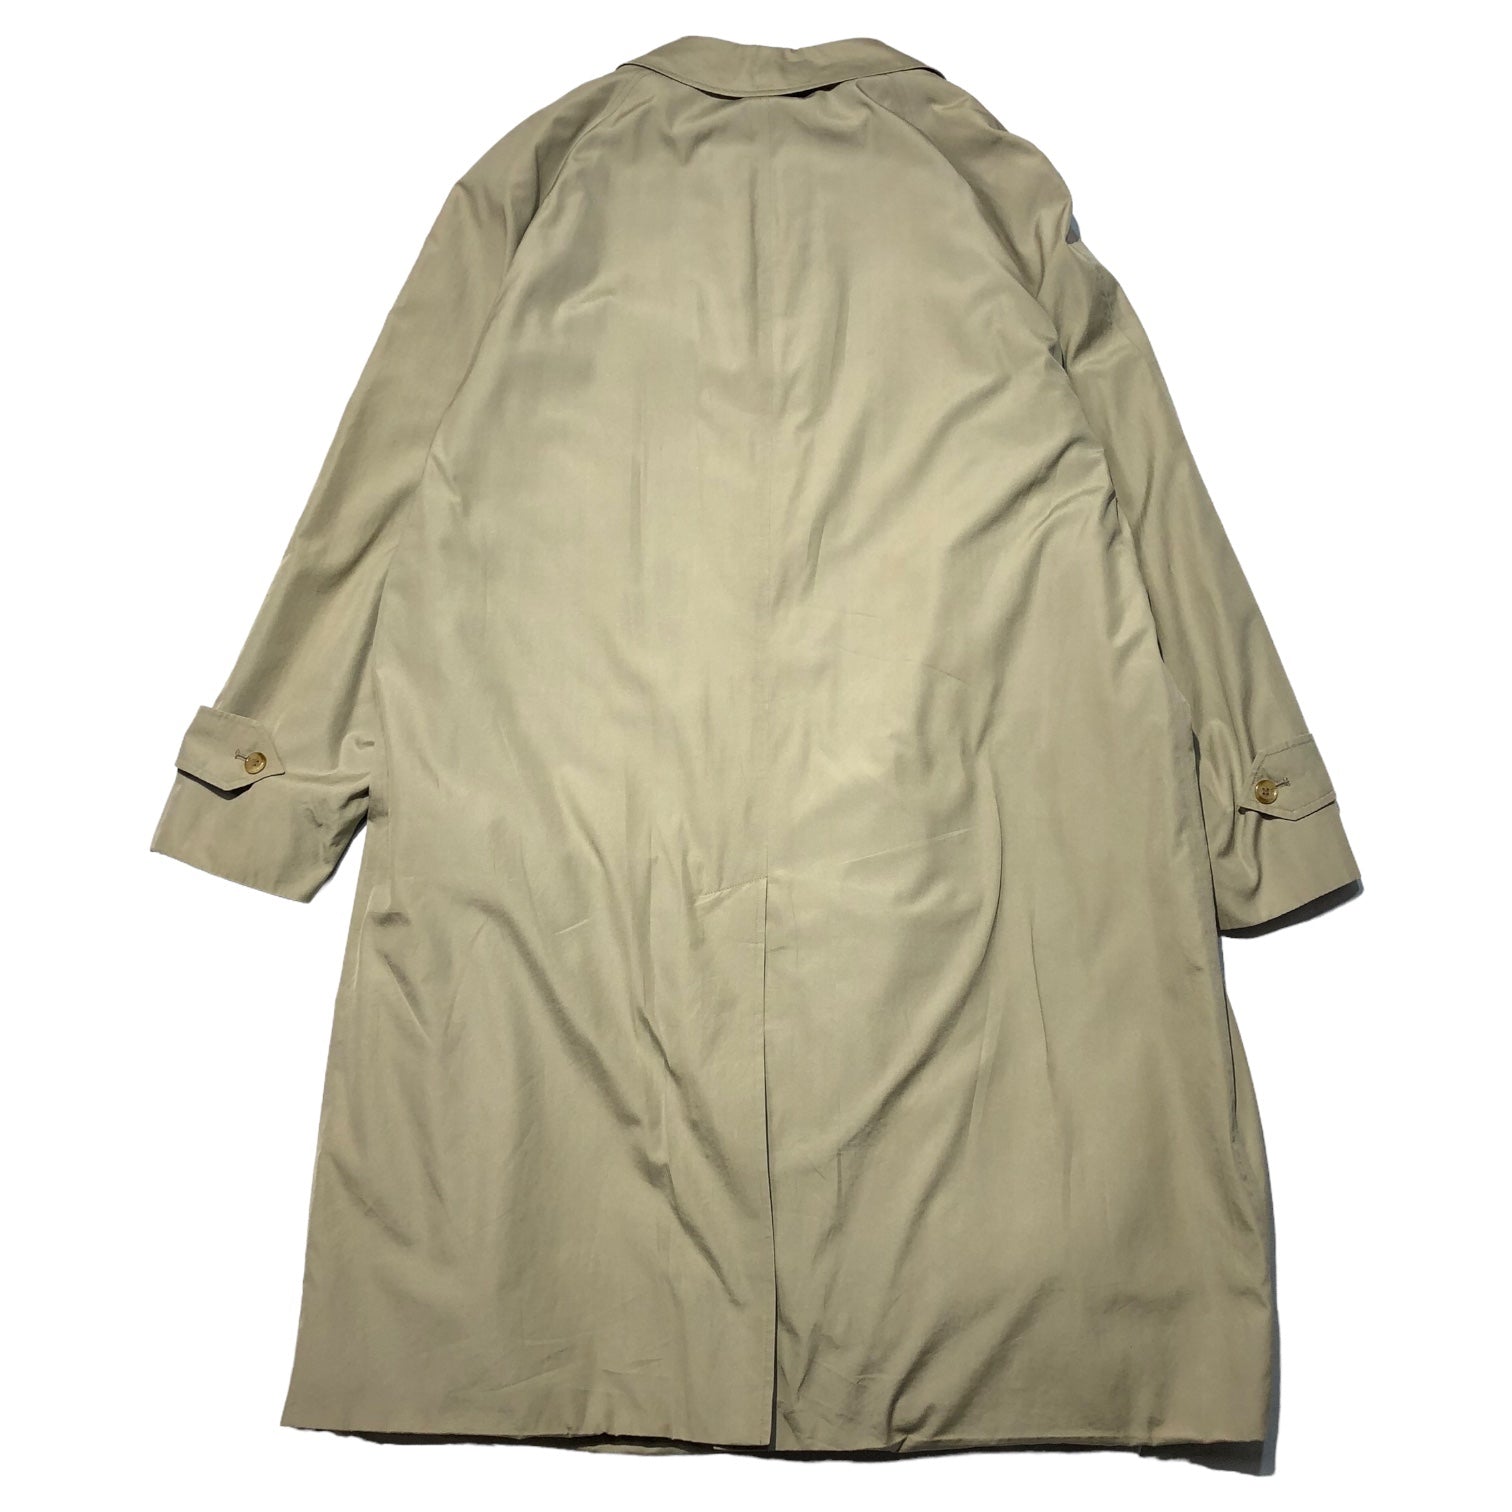 Burberrys(バーバリーズ) 80's ~ 90's 'MARUZEN 80 ANNIVERSARY” Stainless steel collar coat with Nova check liner ノバチェック ライナー付き トレンチコート S5(M程度) ベージュ 80年代～90年代 ヴィンテージ